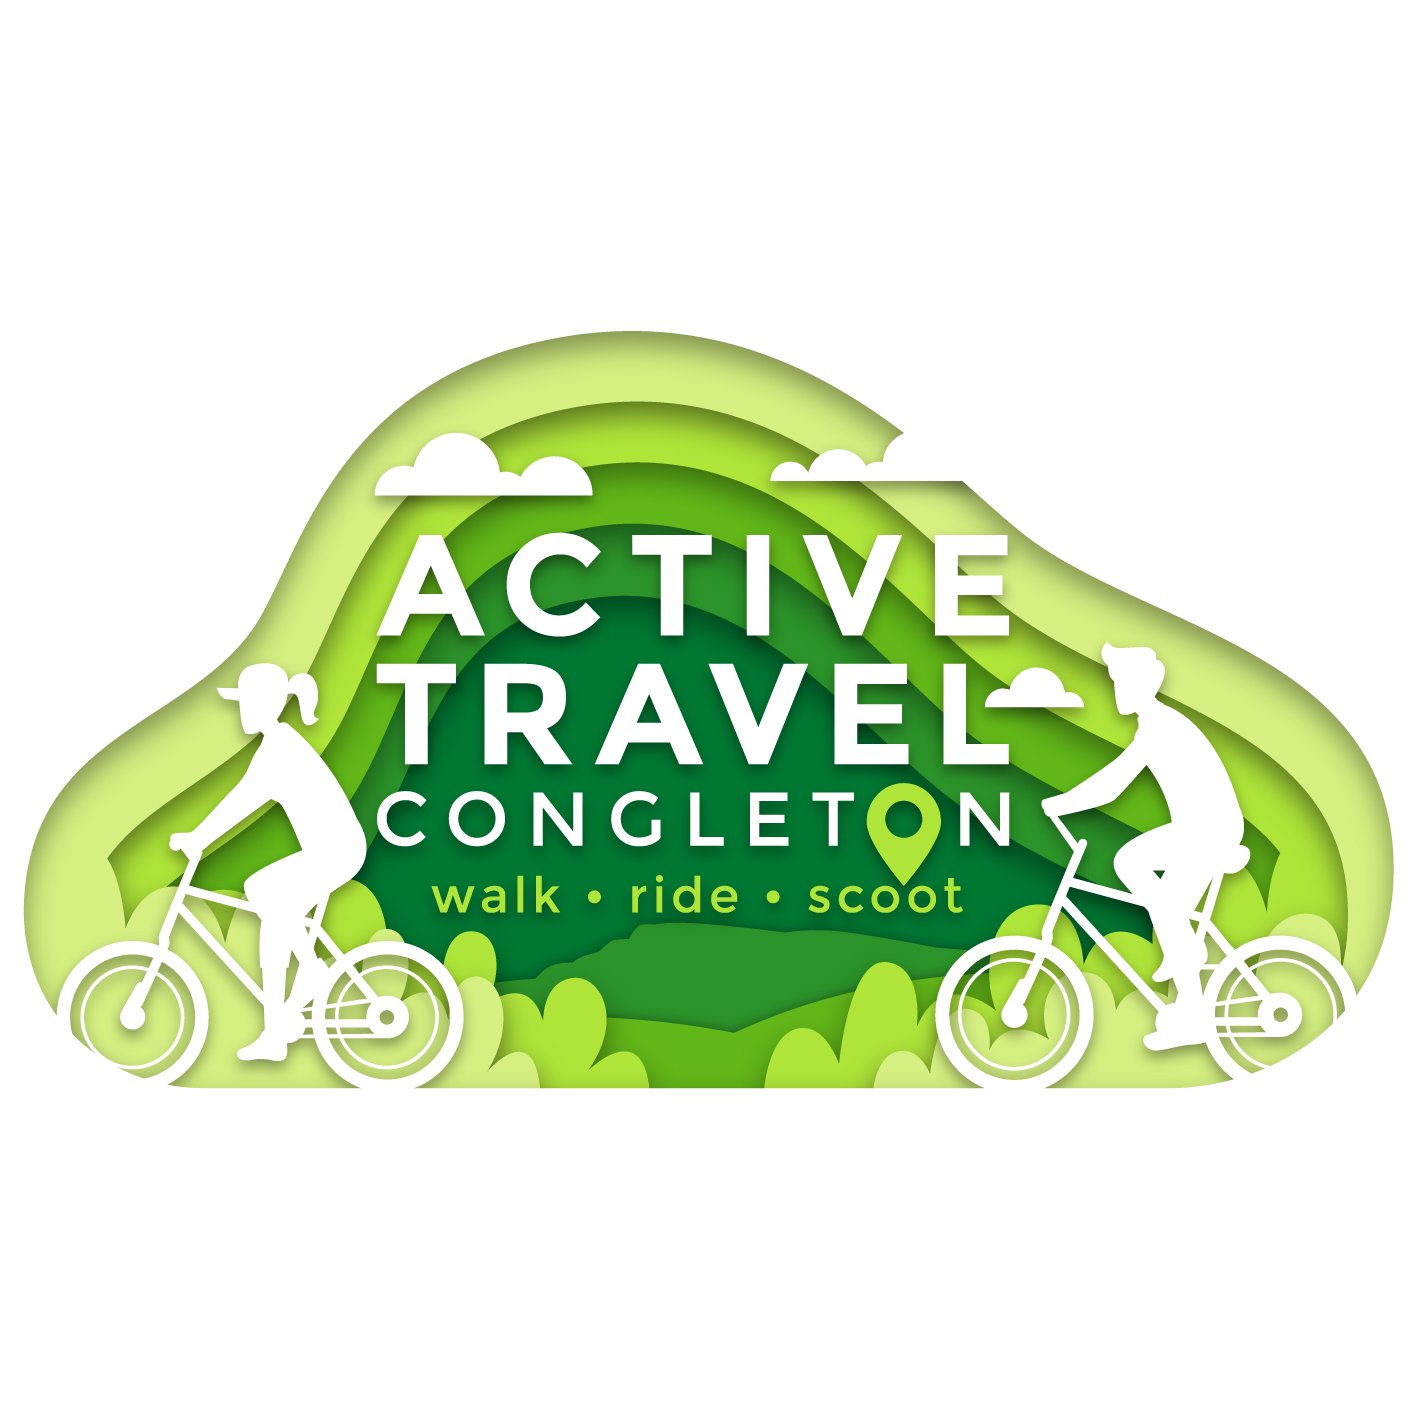 Active Travel Congleton logo design